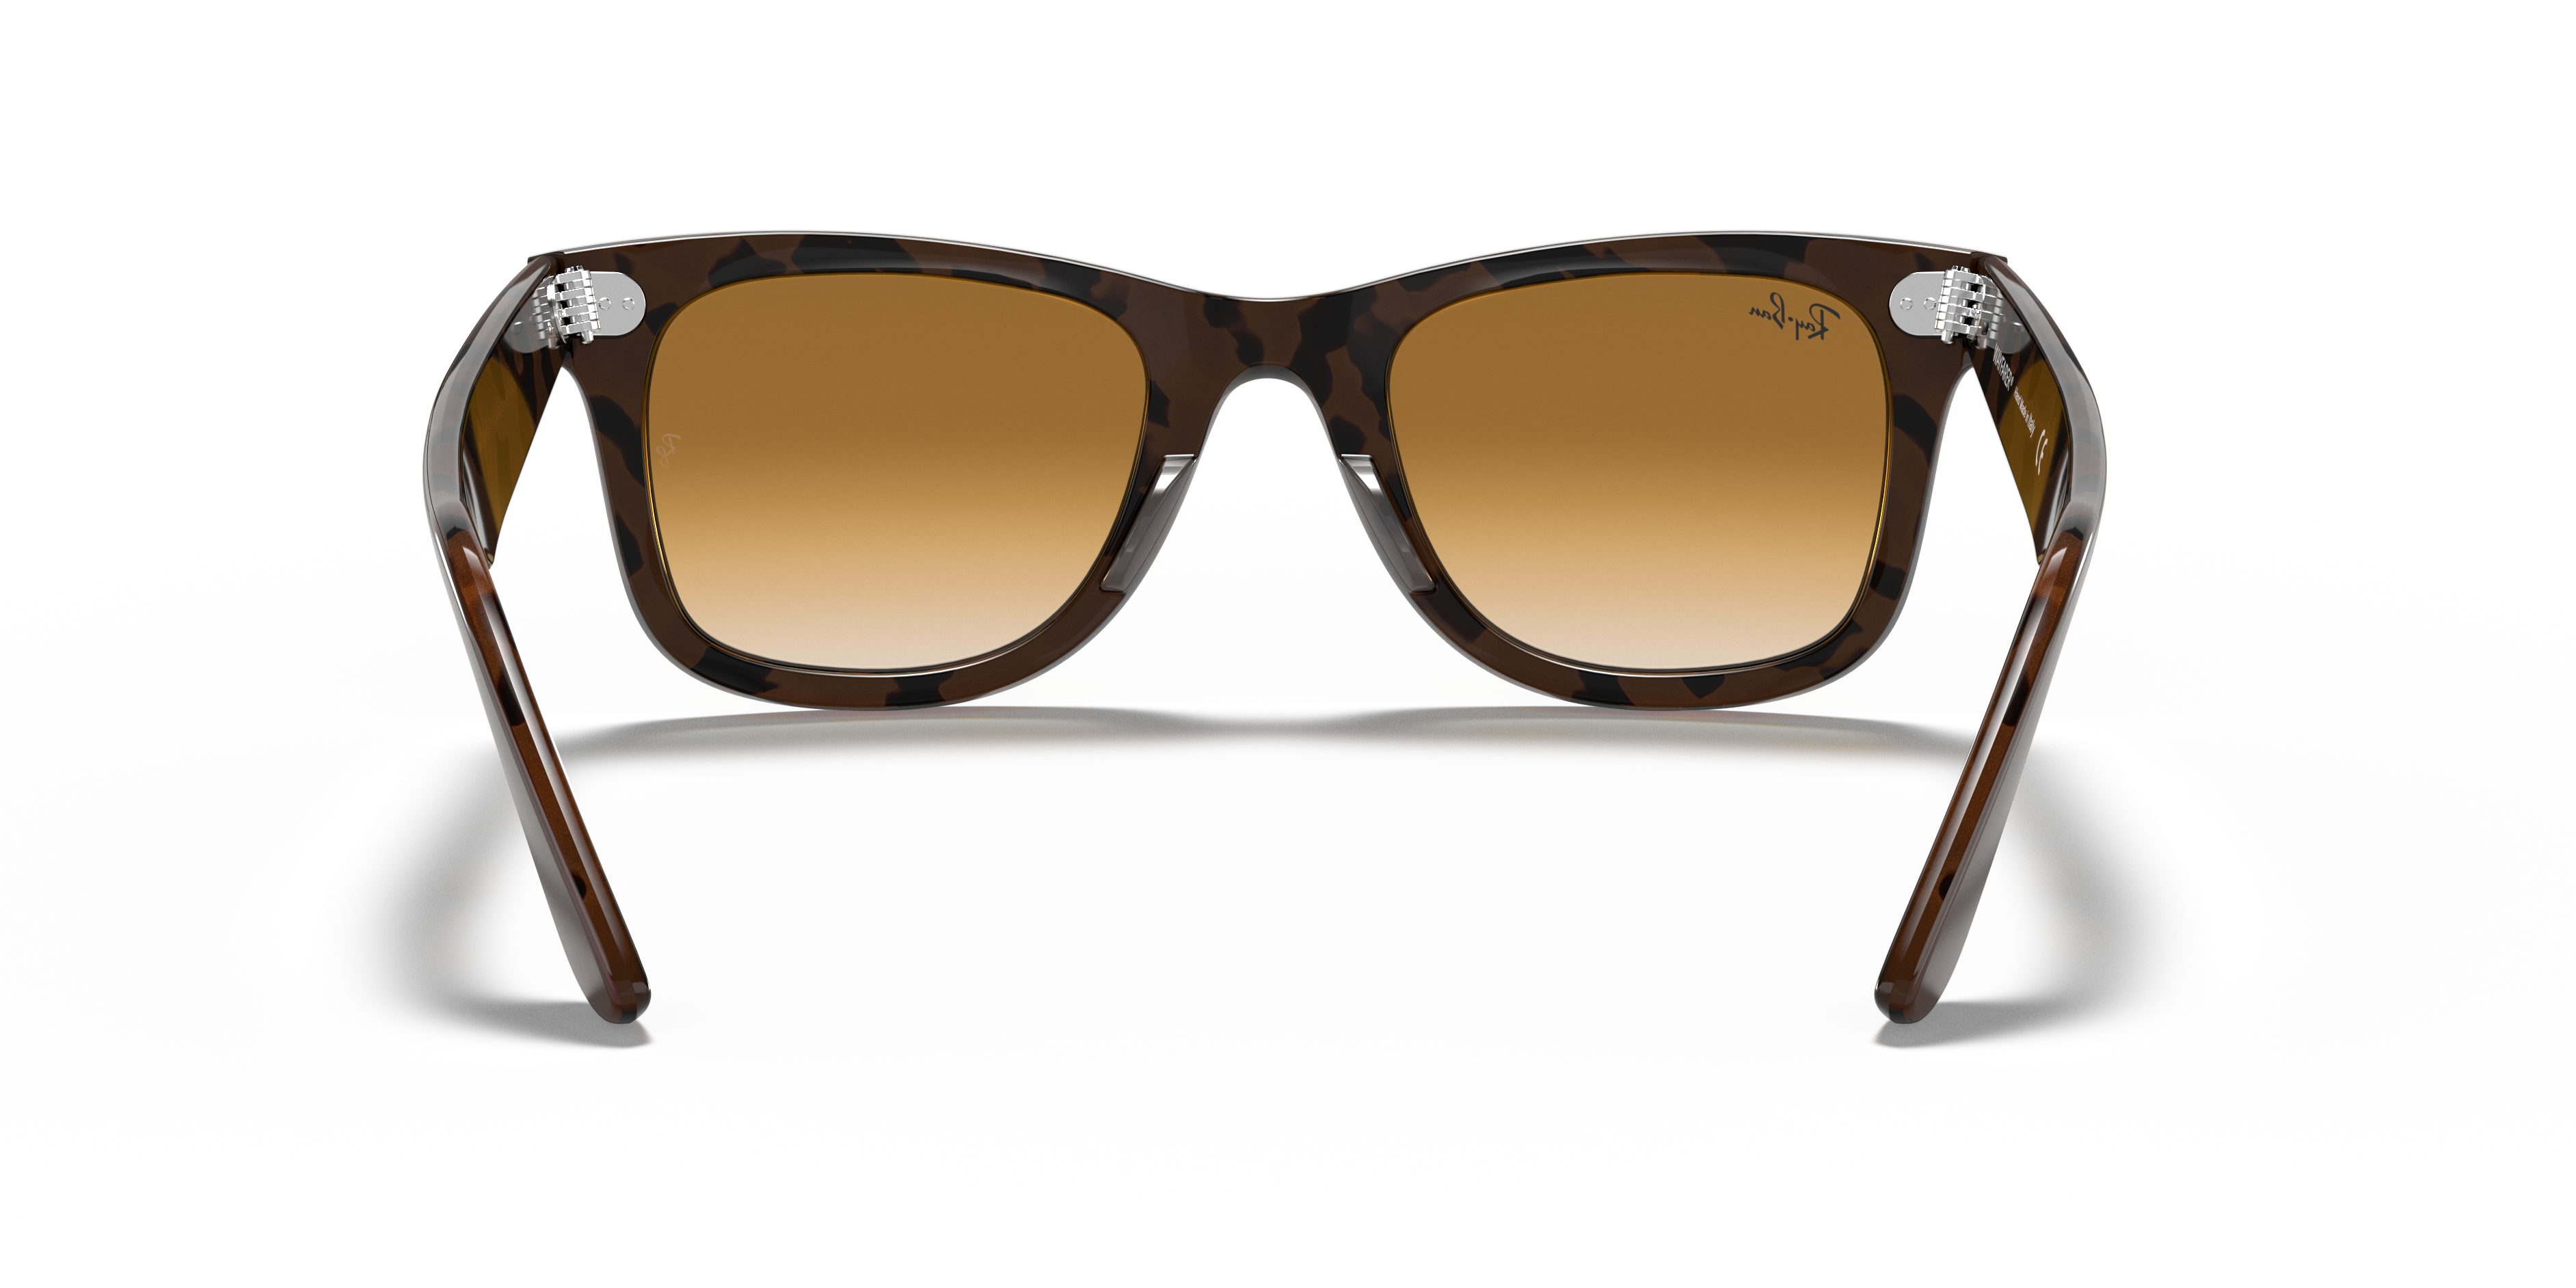 Ray-Ban Wayfarer Sunglasses Accessories Sunglasses & Eyewear Sunglasses Millionaire Luxury Eyewear Unisex 90s Trendy Shades Gift For Her RB2140 Multi Art Frame Eyeglasses 